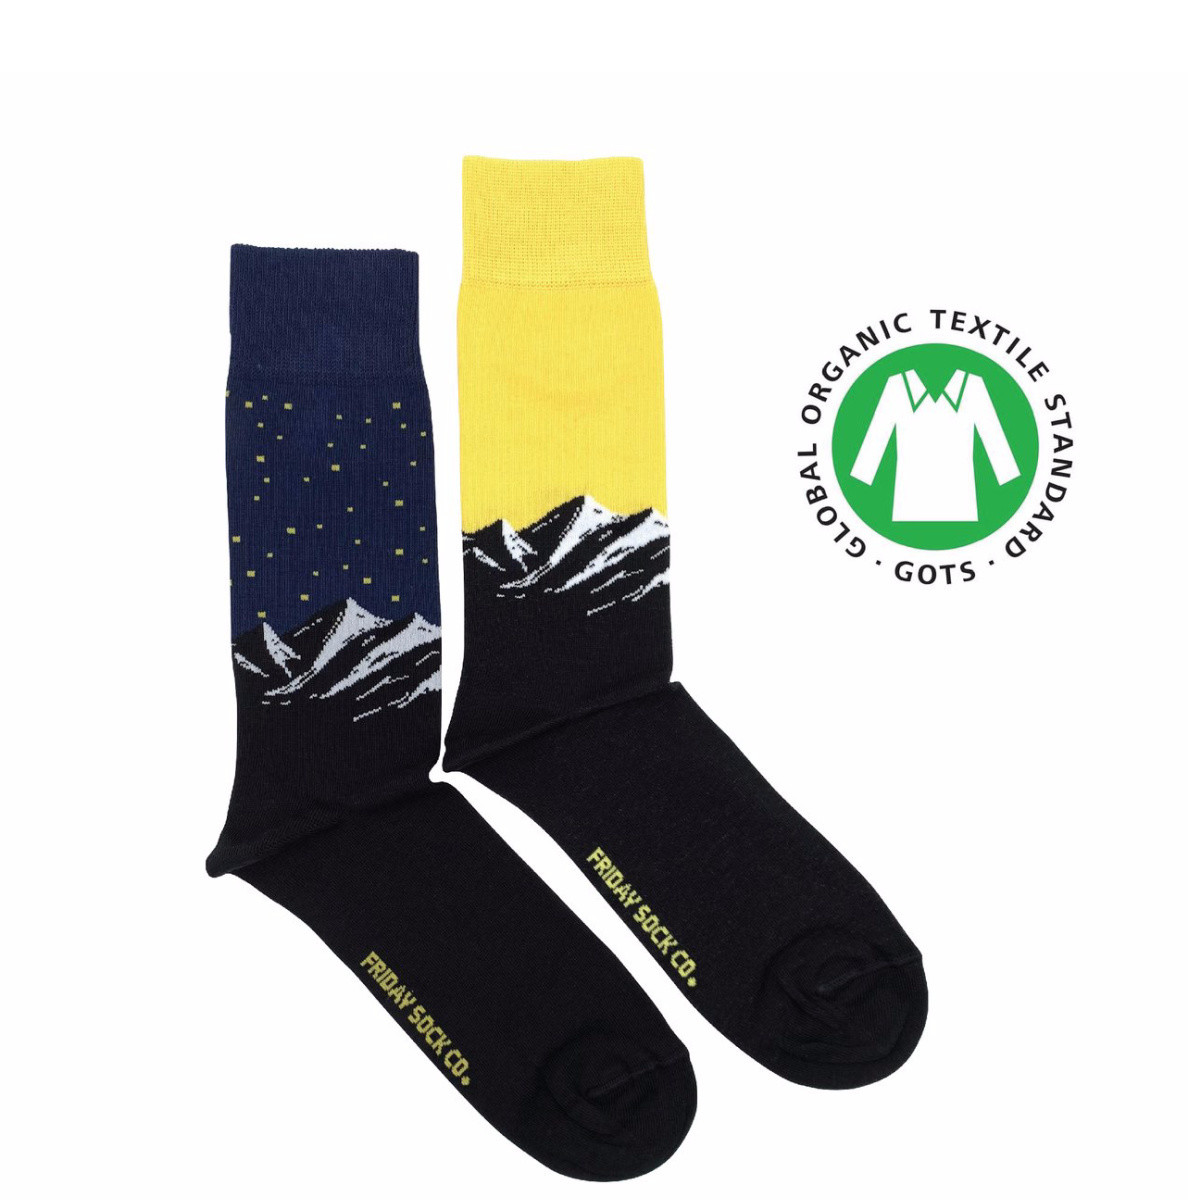 Friday Sock Co. Men's Organic Cotton Mountain/Sunset Socks